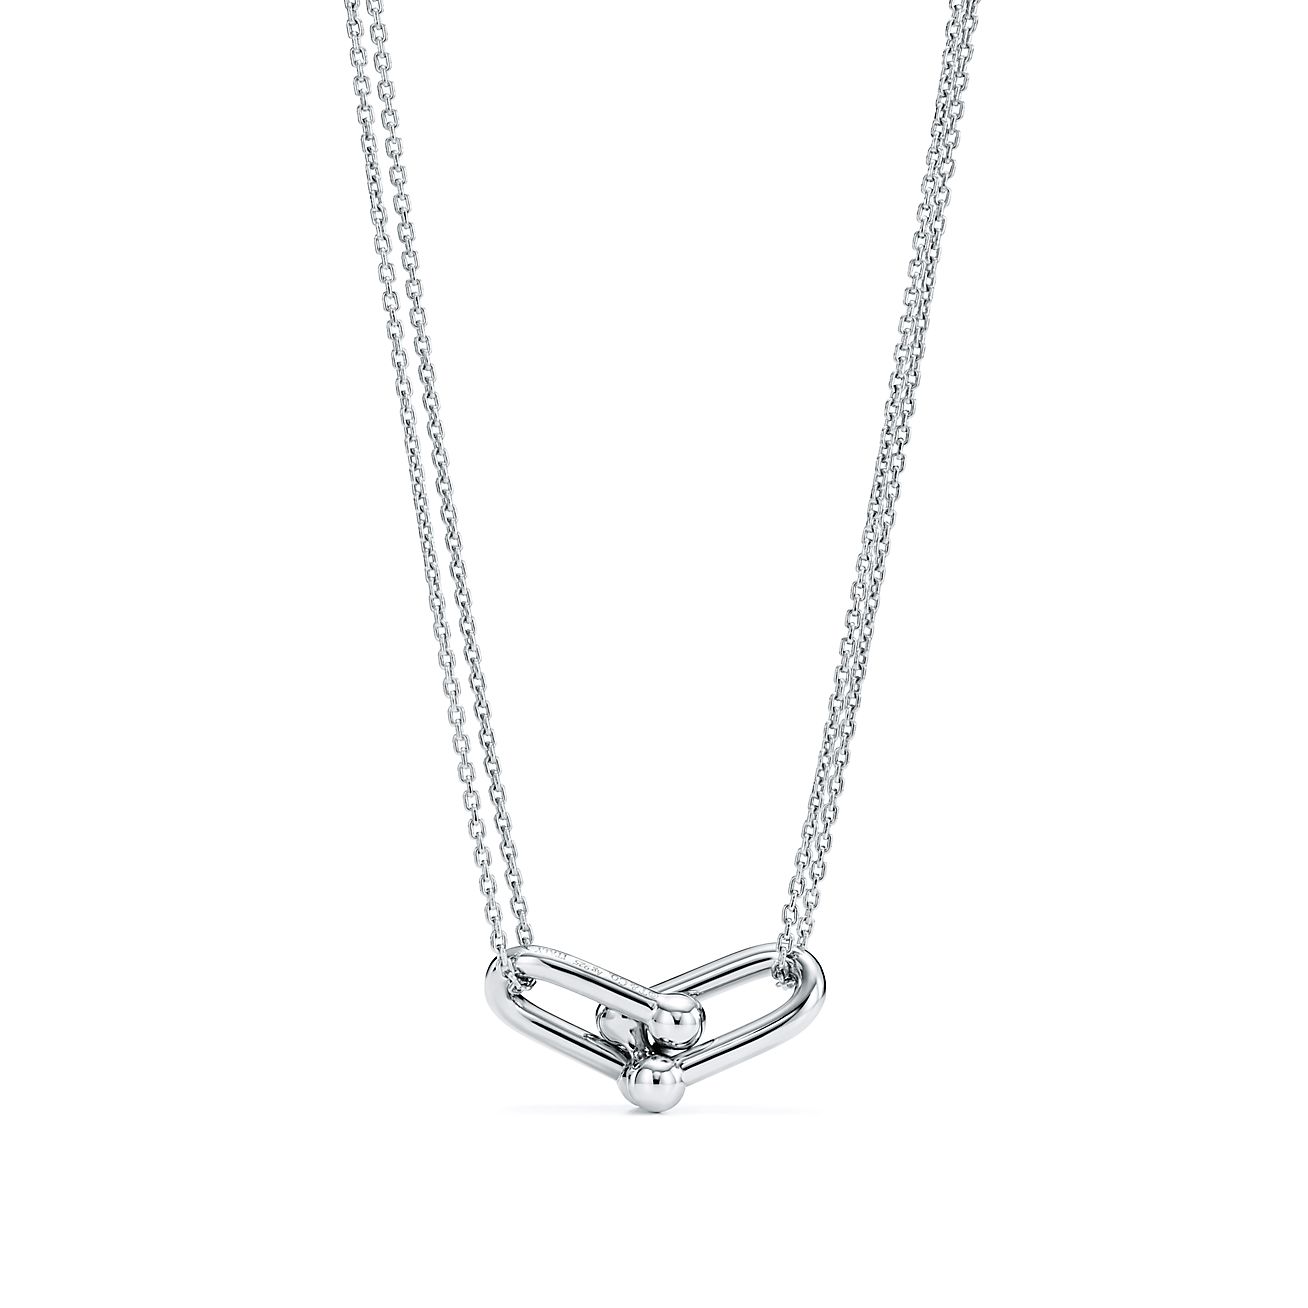 Authentic Tiffany Hardware Graduated Link Necklace #260-004-770-3605 | eBay